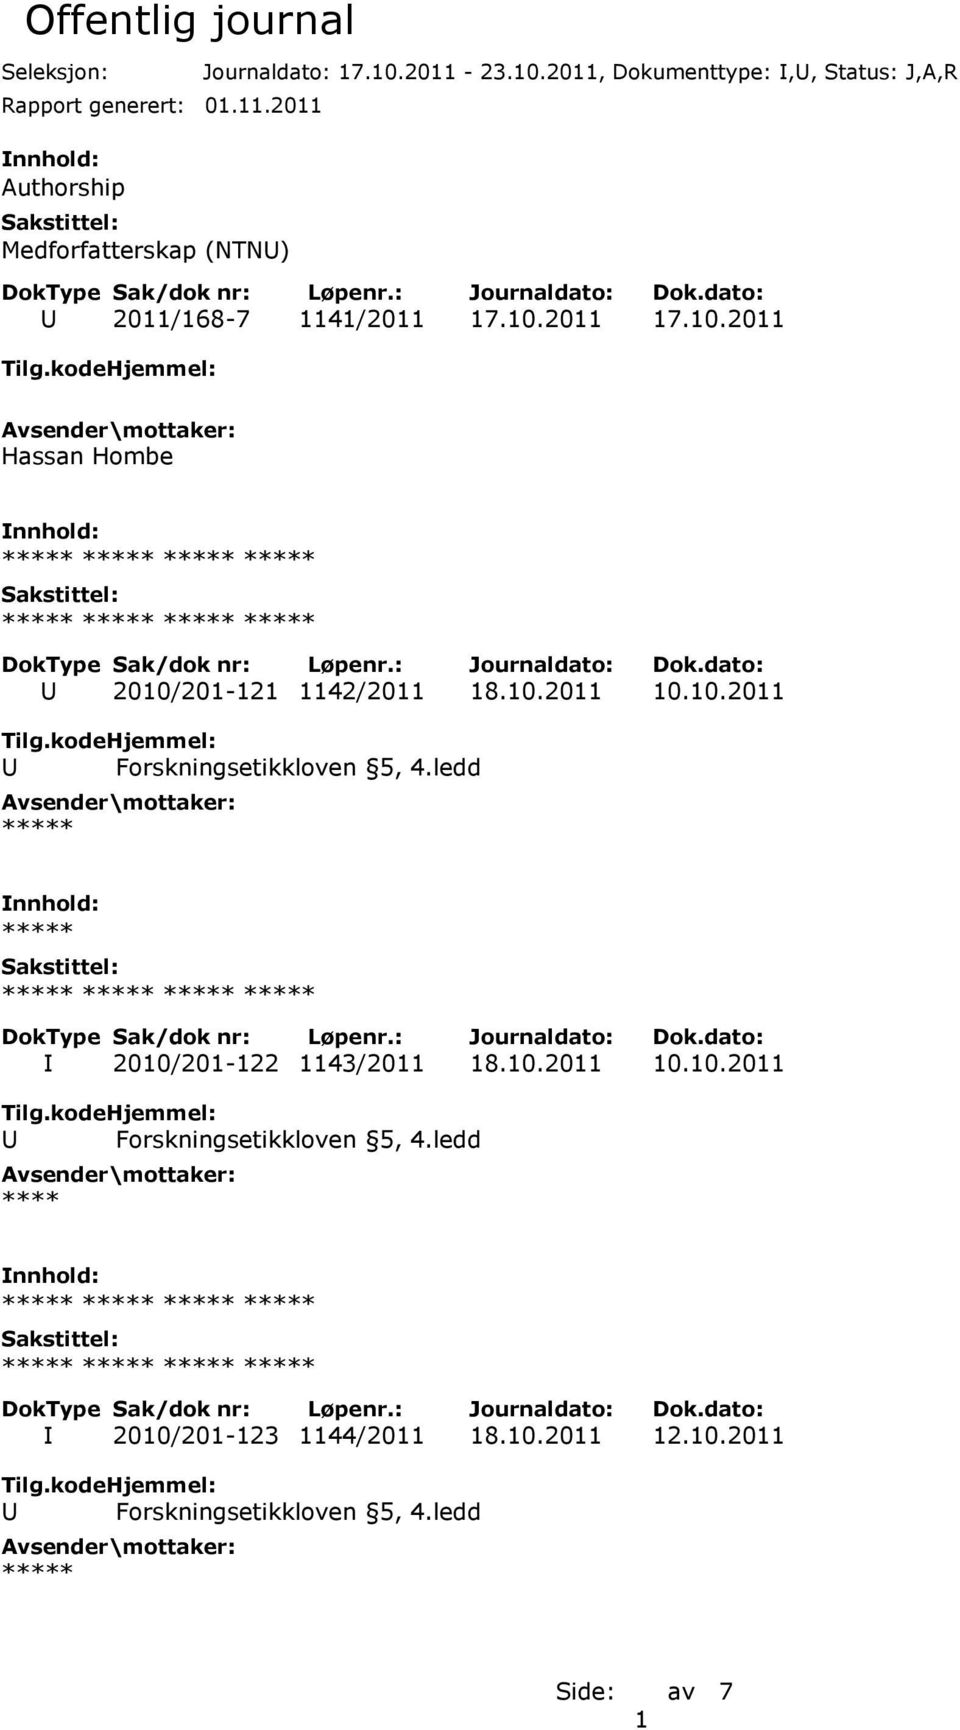 2011-23.10.2011, Dokumenttype: I,U, Status: J,A,R U 2011/168-7 1141/2011 17.10.2011 17.10.2011 Hassan Hombe U 2010/201-121 1142/2011 18.